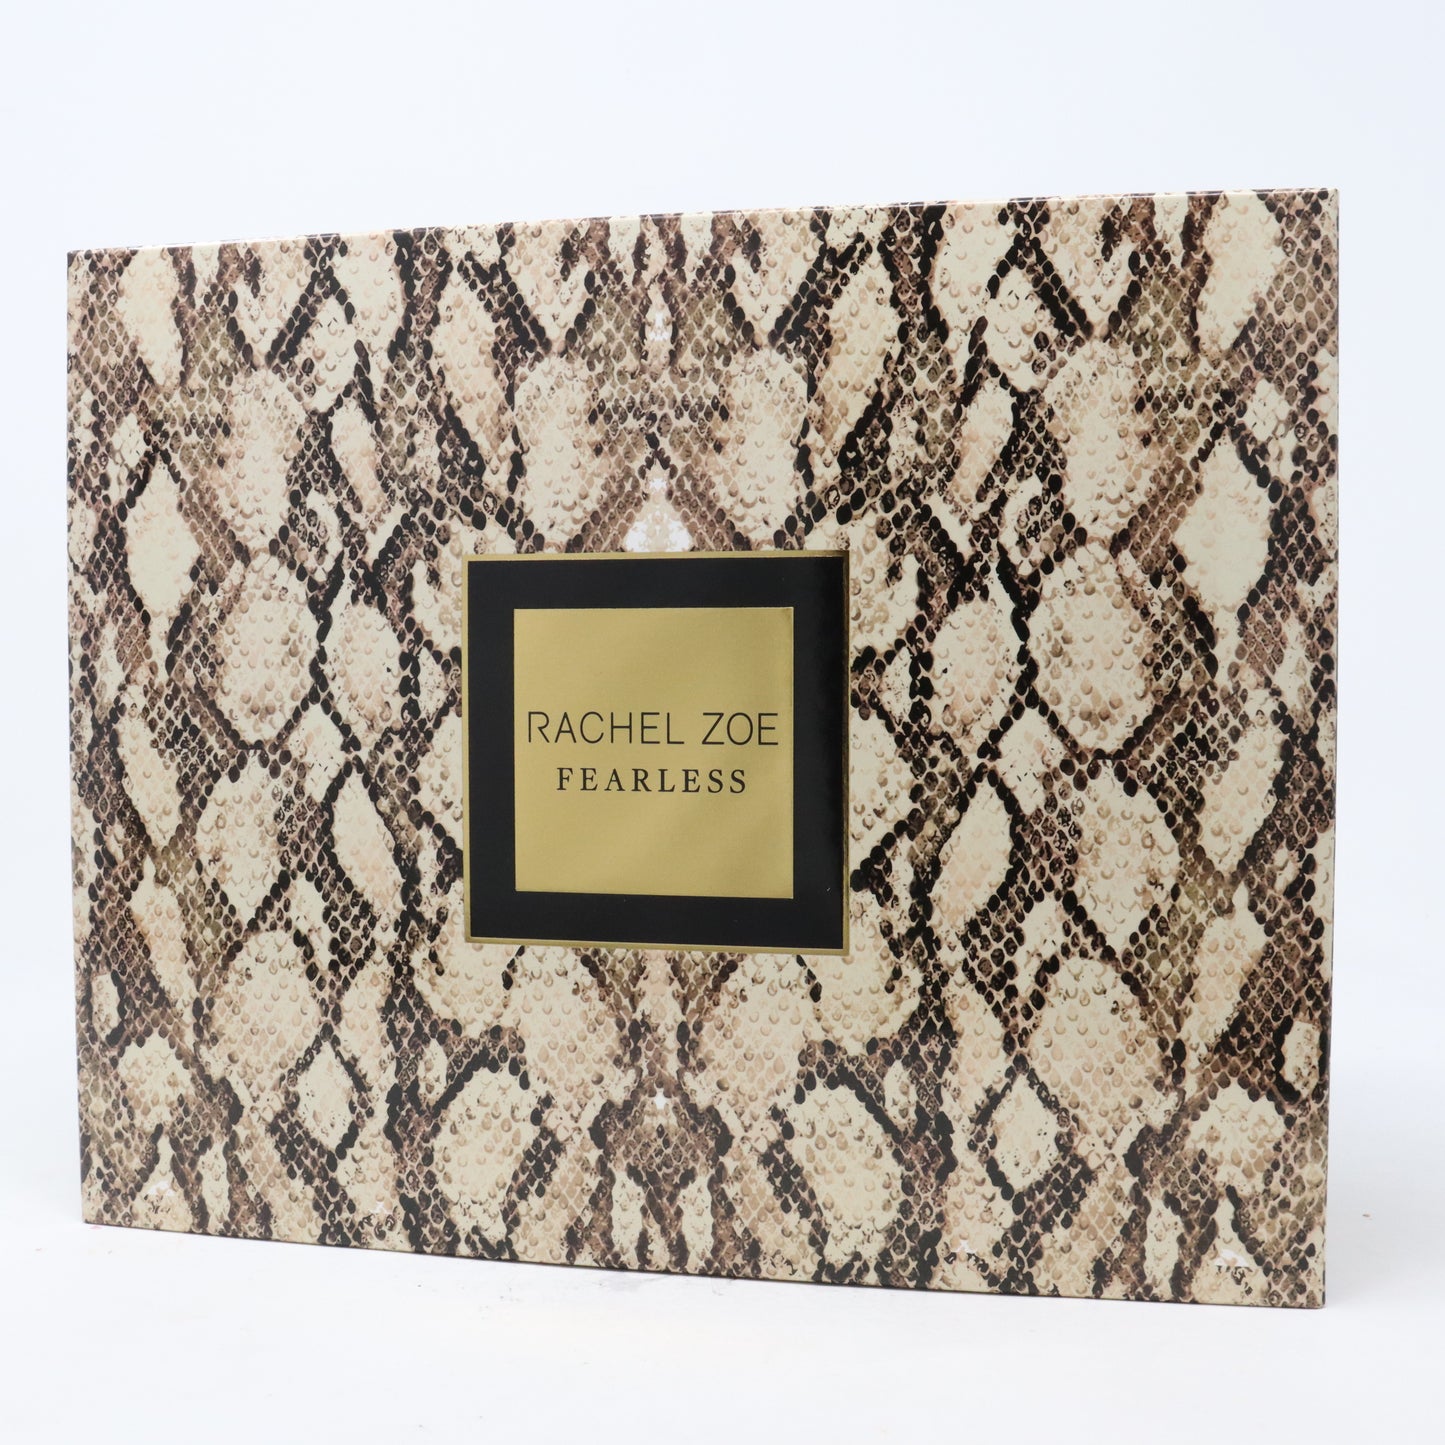 Rachel Zoe Fearless 3 Pcs Gift Set  / New With Box